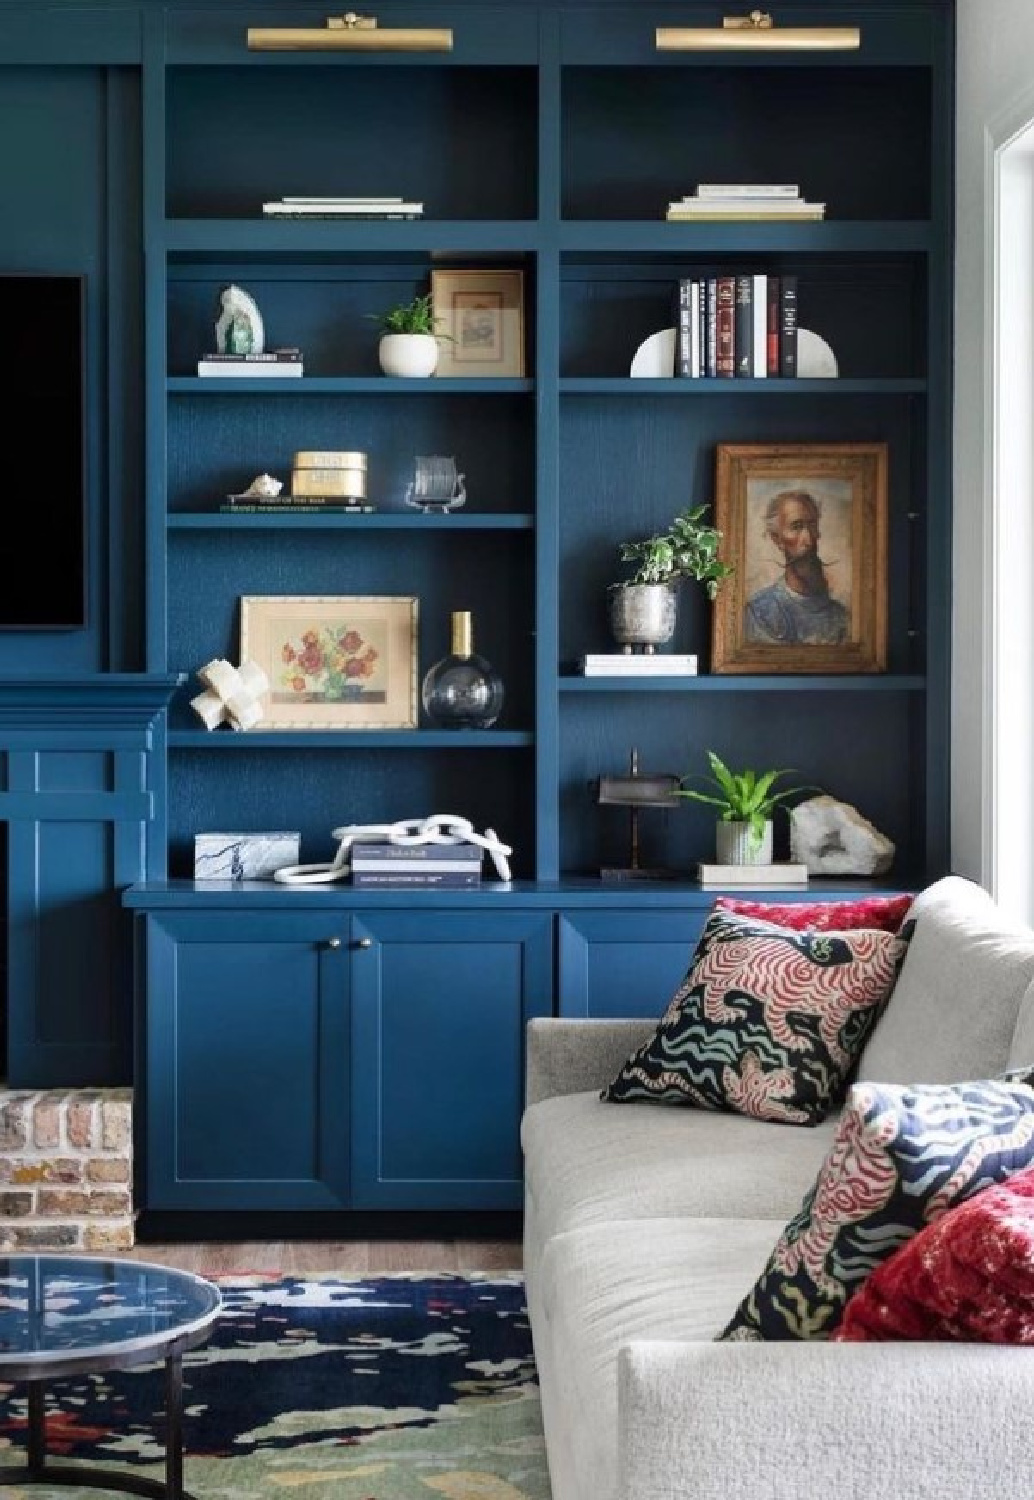 Farrow & Ball Hague Blue on built-in shelves in a family room with sofa. #hagueblue #bestmoodybluepaintcolors